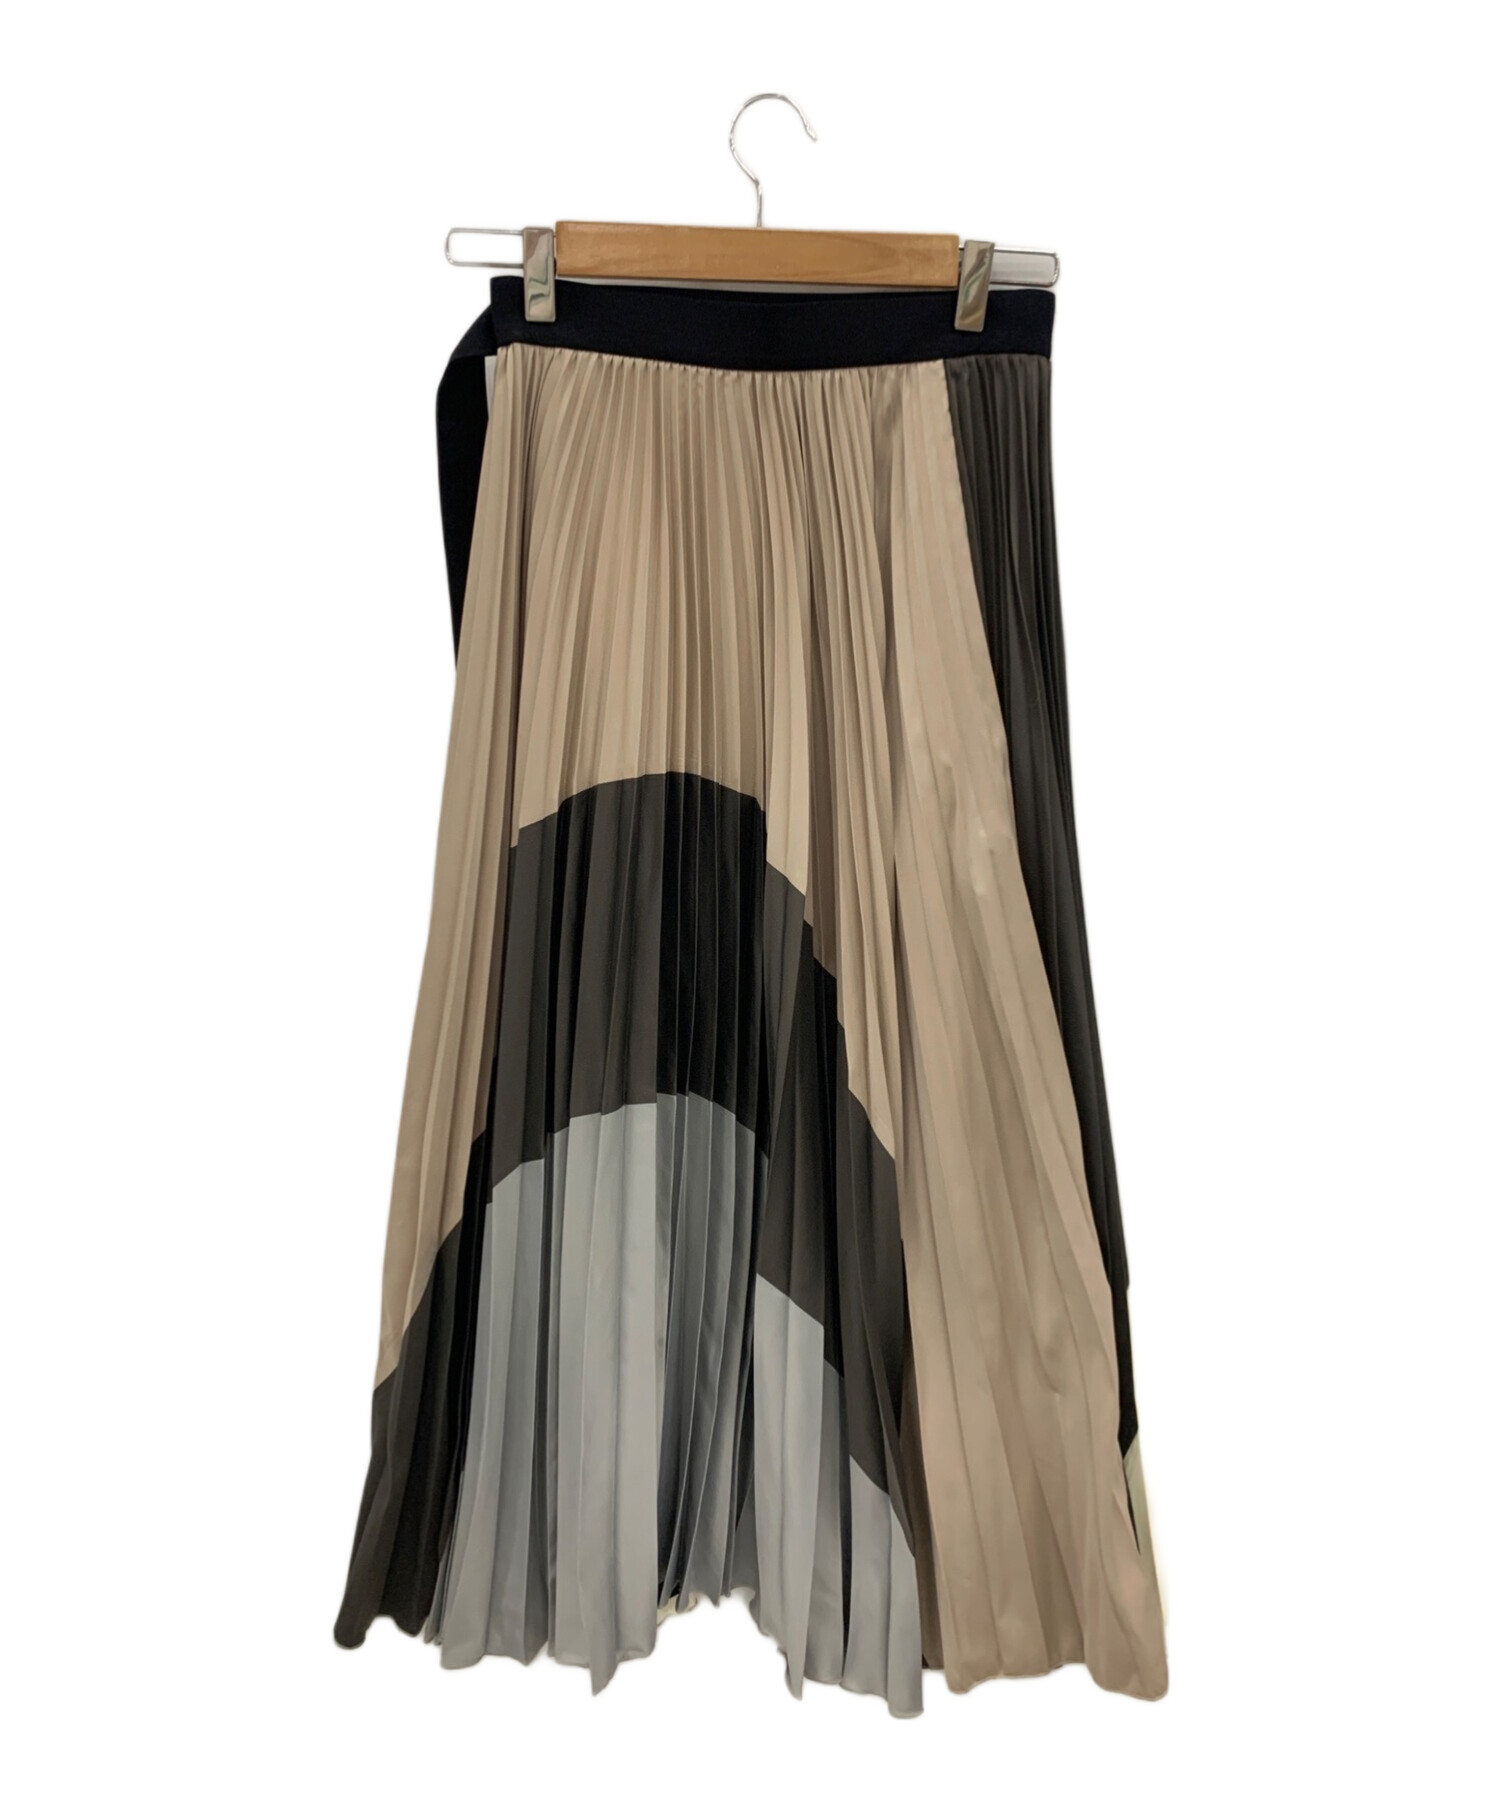 UNITED TOKYO (ユナイテッドトーキョー) カラードプリーツスカート ベージュ×チャコールグレー サイズ:1